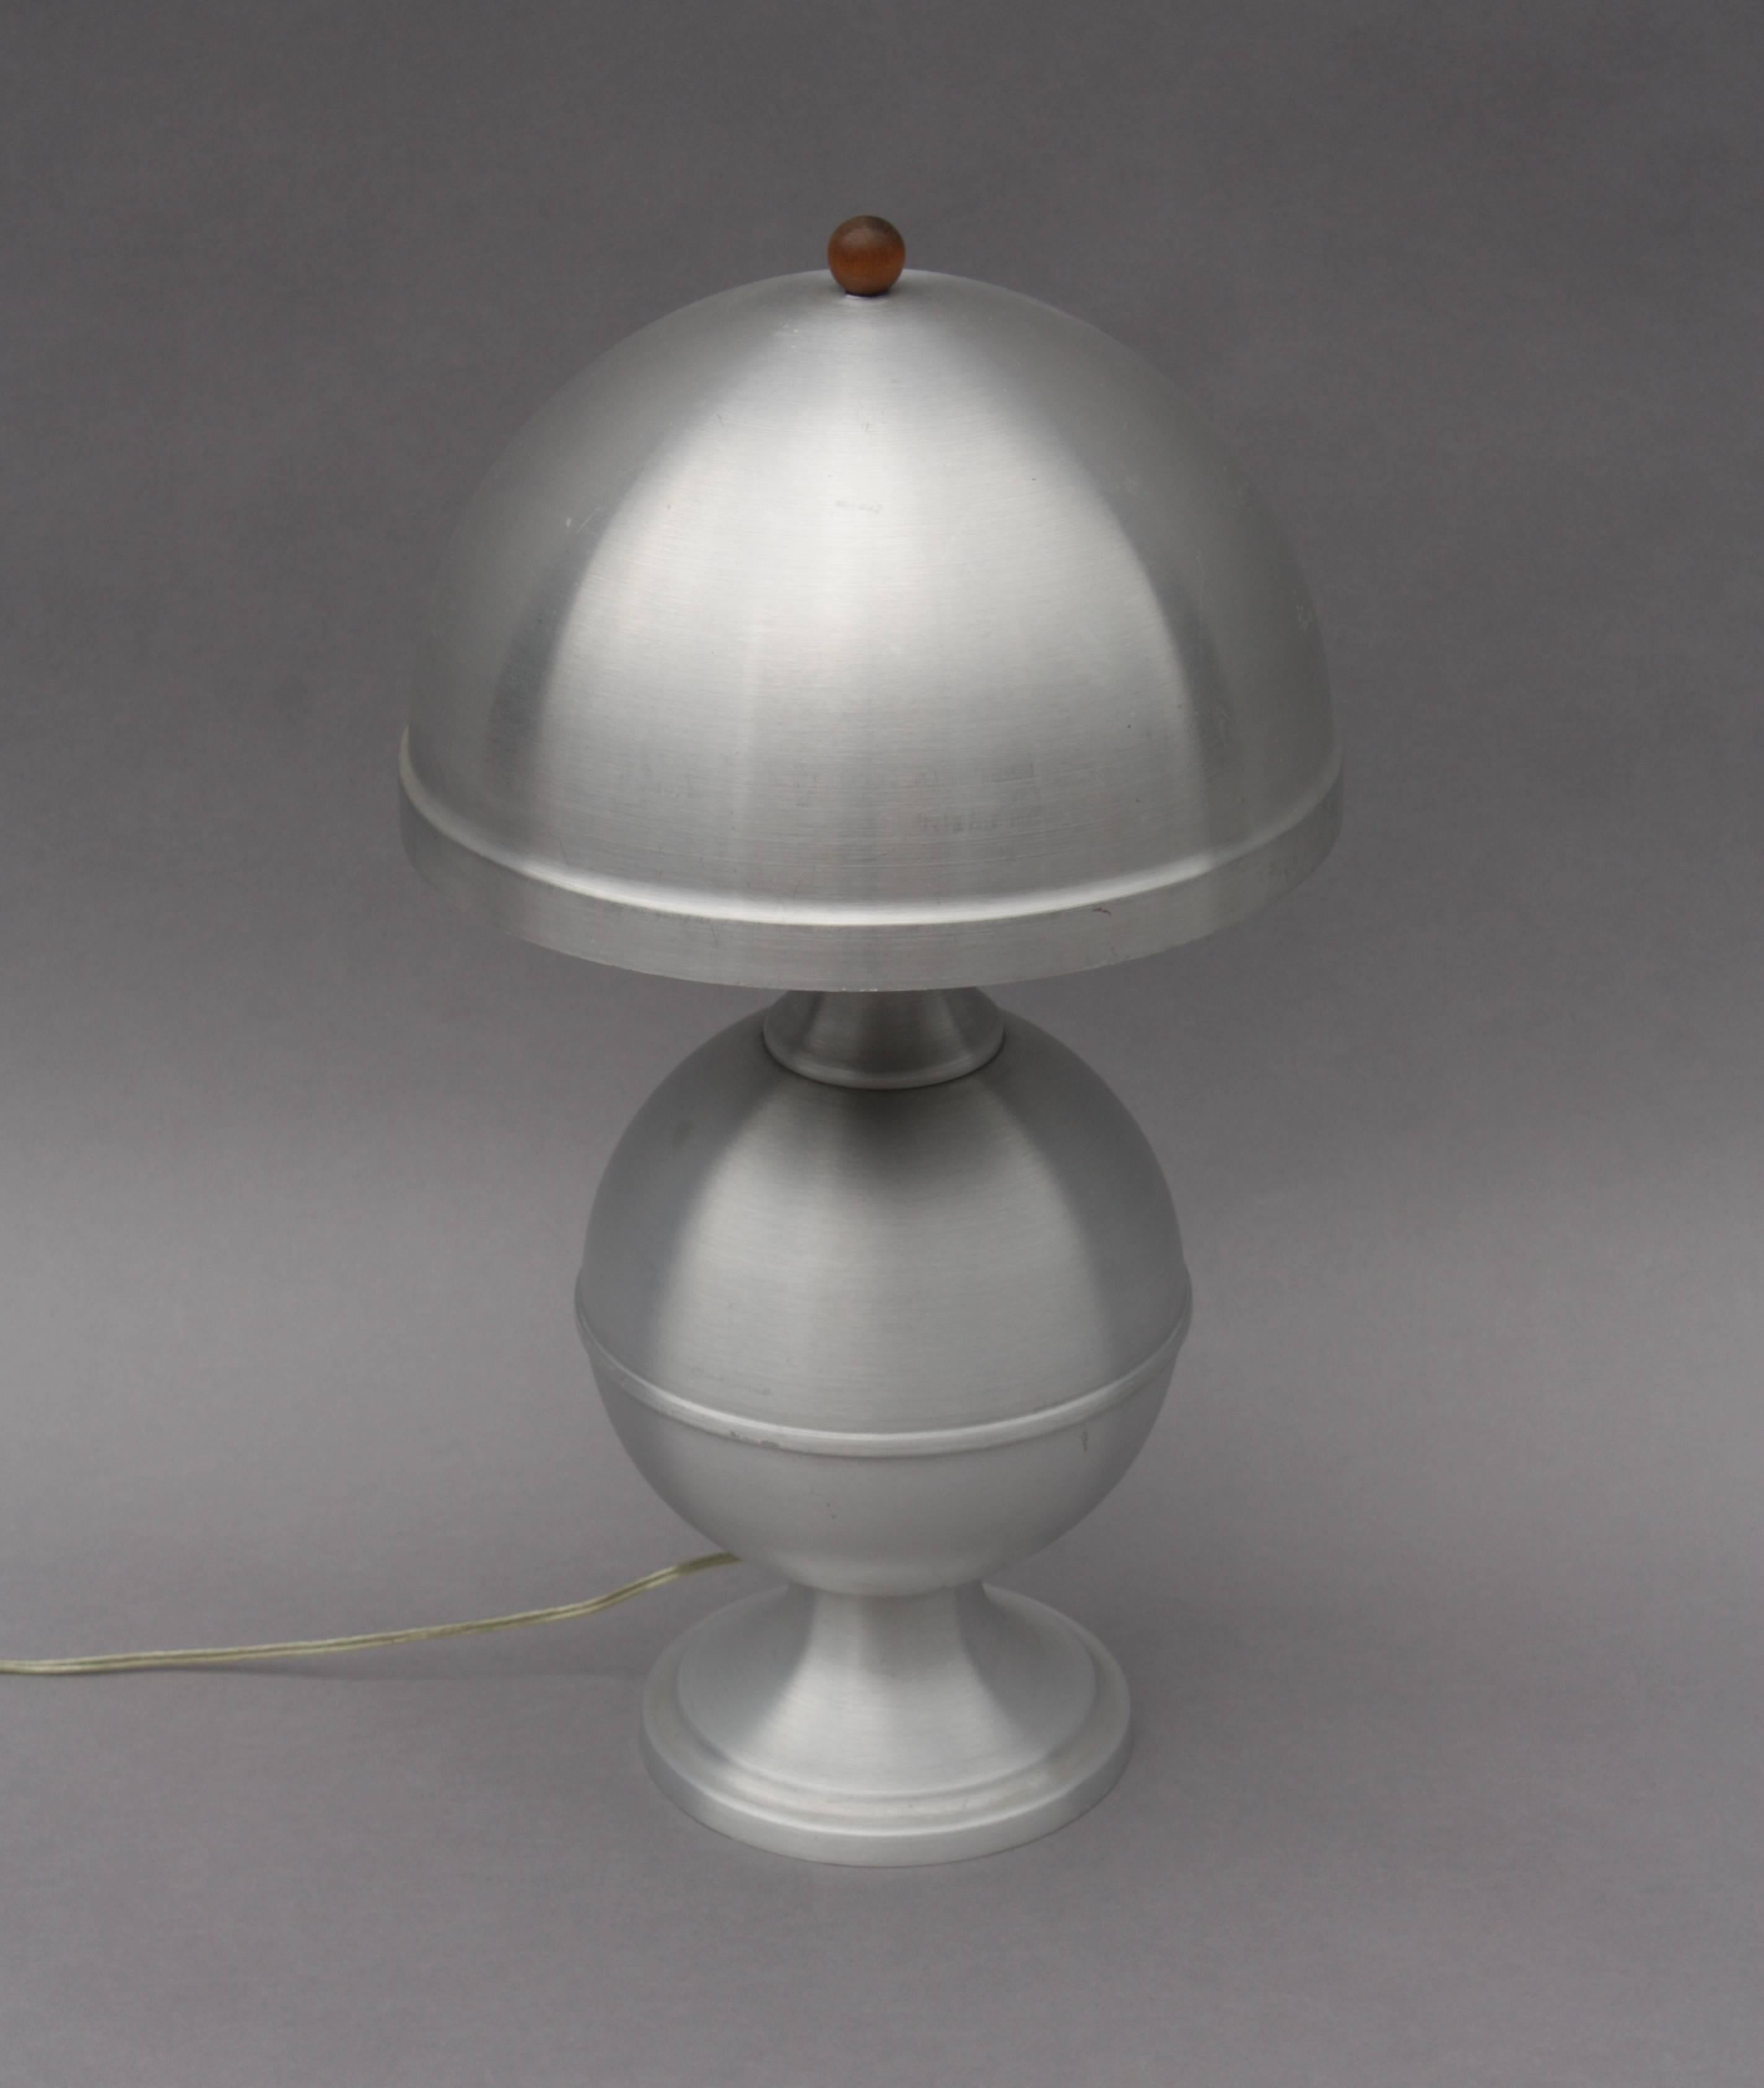 Wonderful Machine Age lamp spun aluminum attributed to Russel Wright.